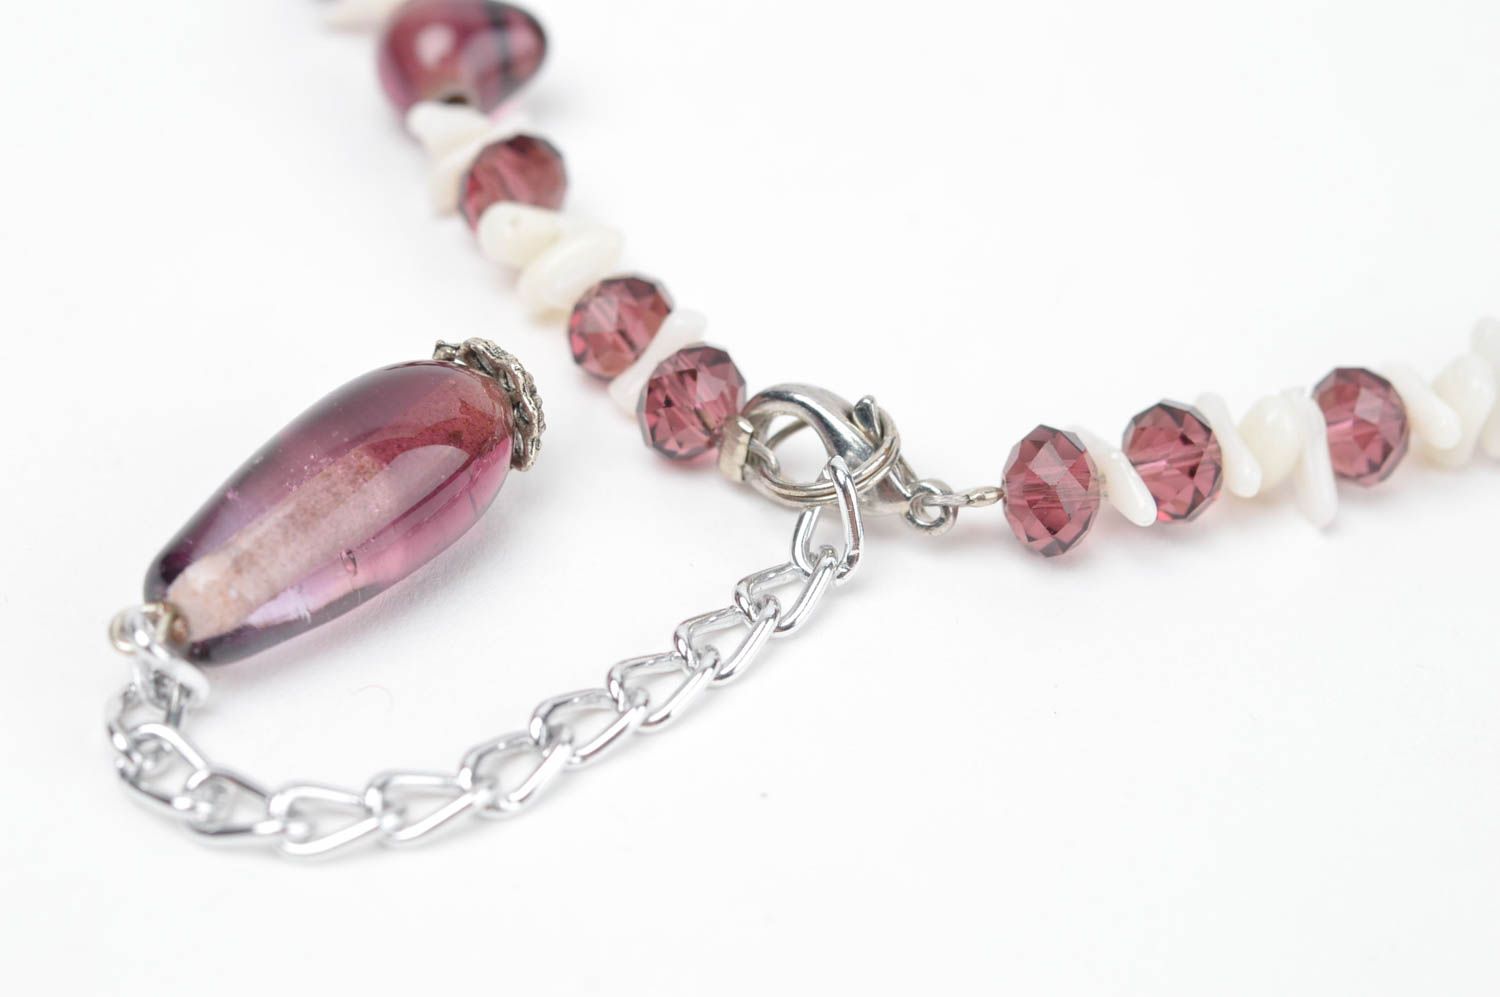 Beautiful handmade glass bead necklace beadwork ideas accessories for girls photo 3